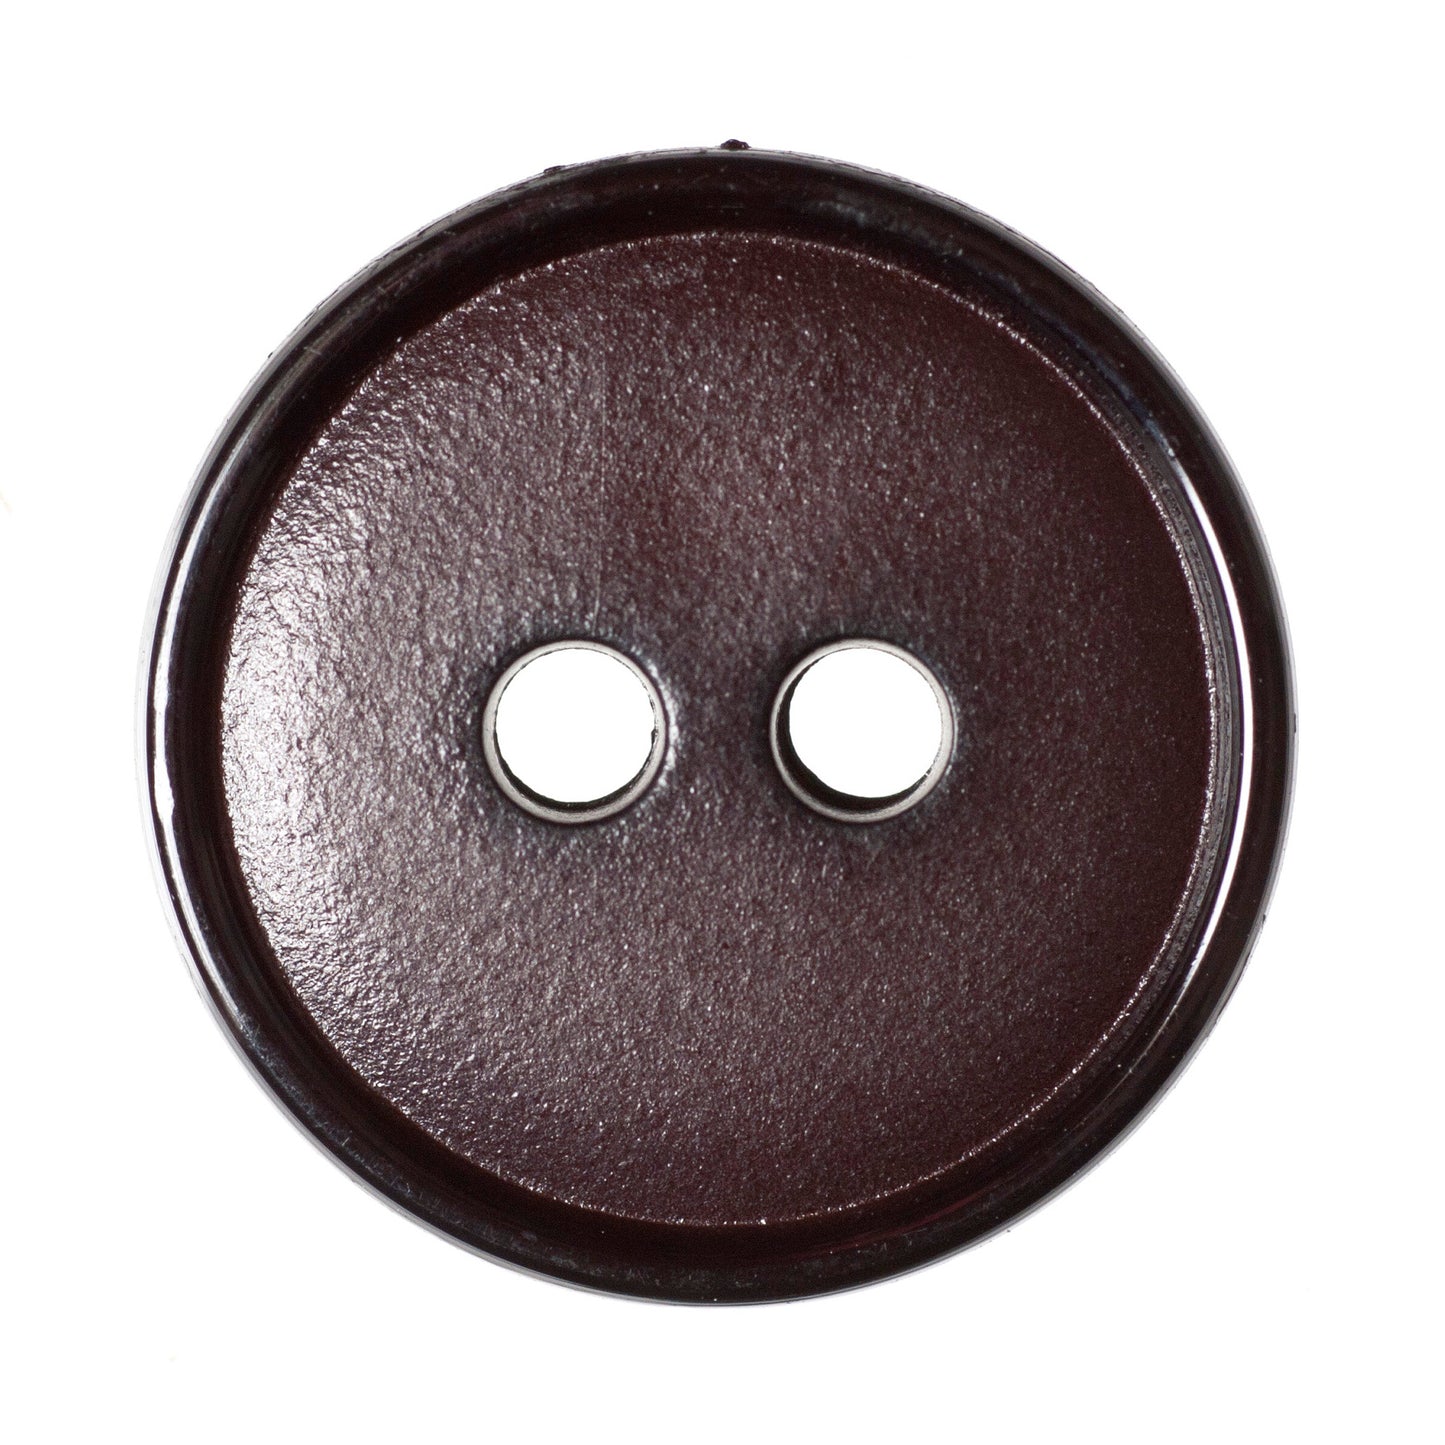 Narrow Rim 2 Hole Button Shiny/Matt - 15mm - Brown [LB33.6]